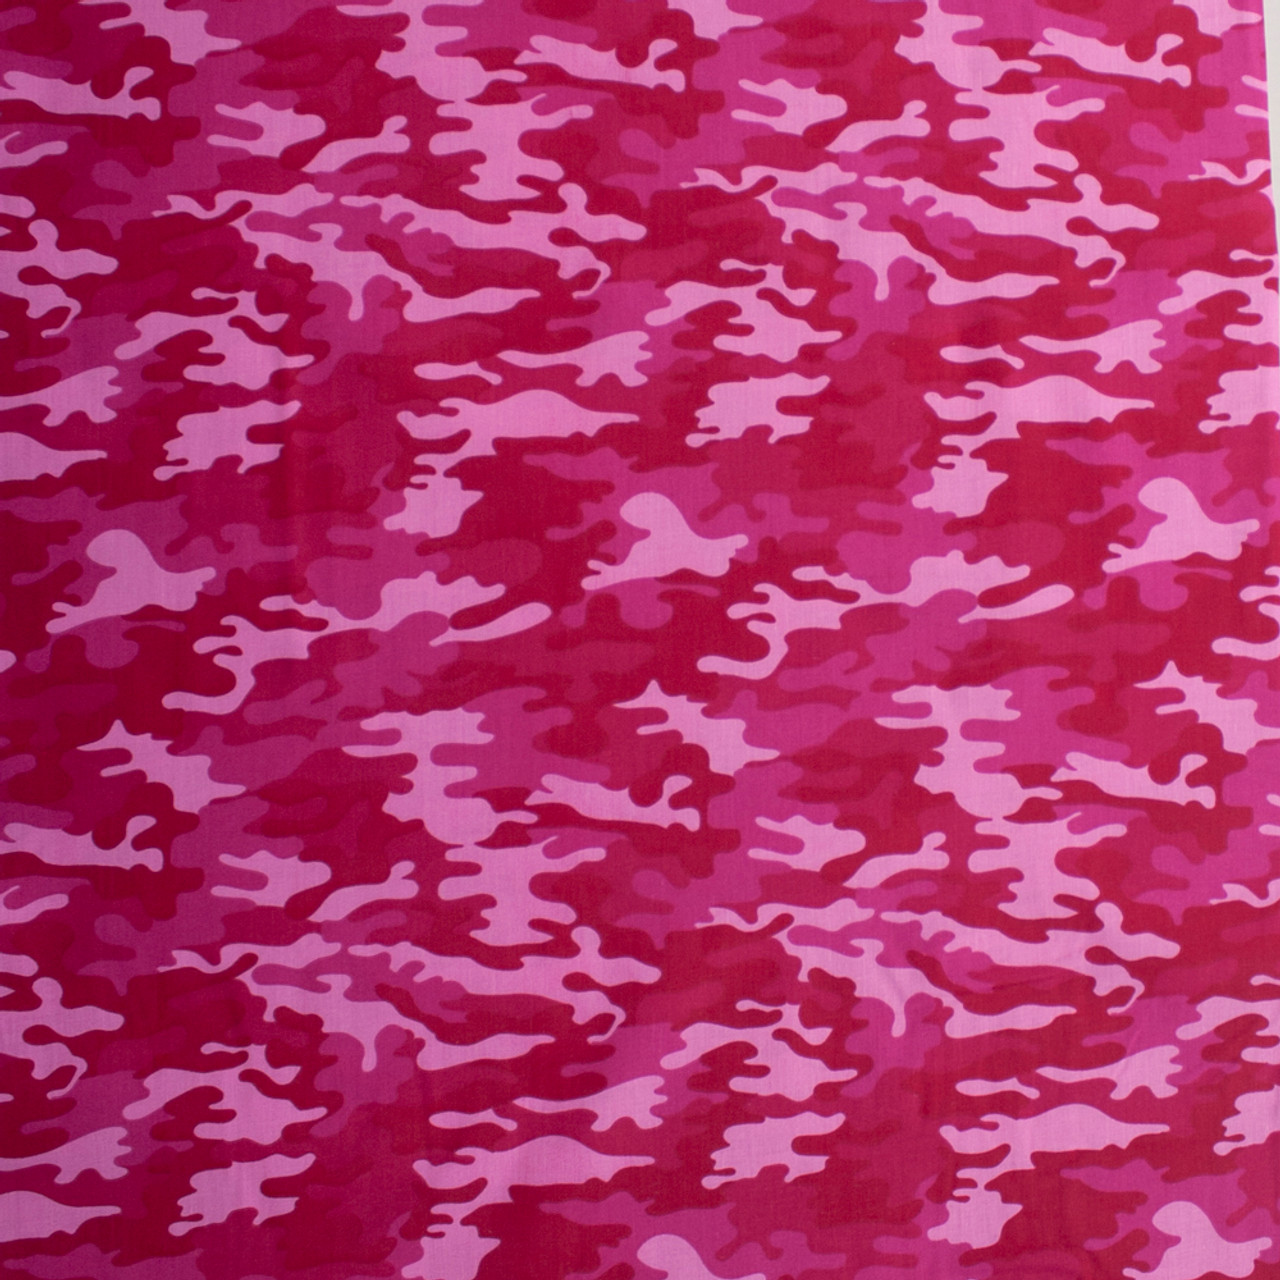 Cotton Prints Fabric  Pink camo wallpaper, Camo wallpaper, Pink fabric